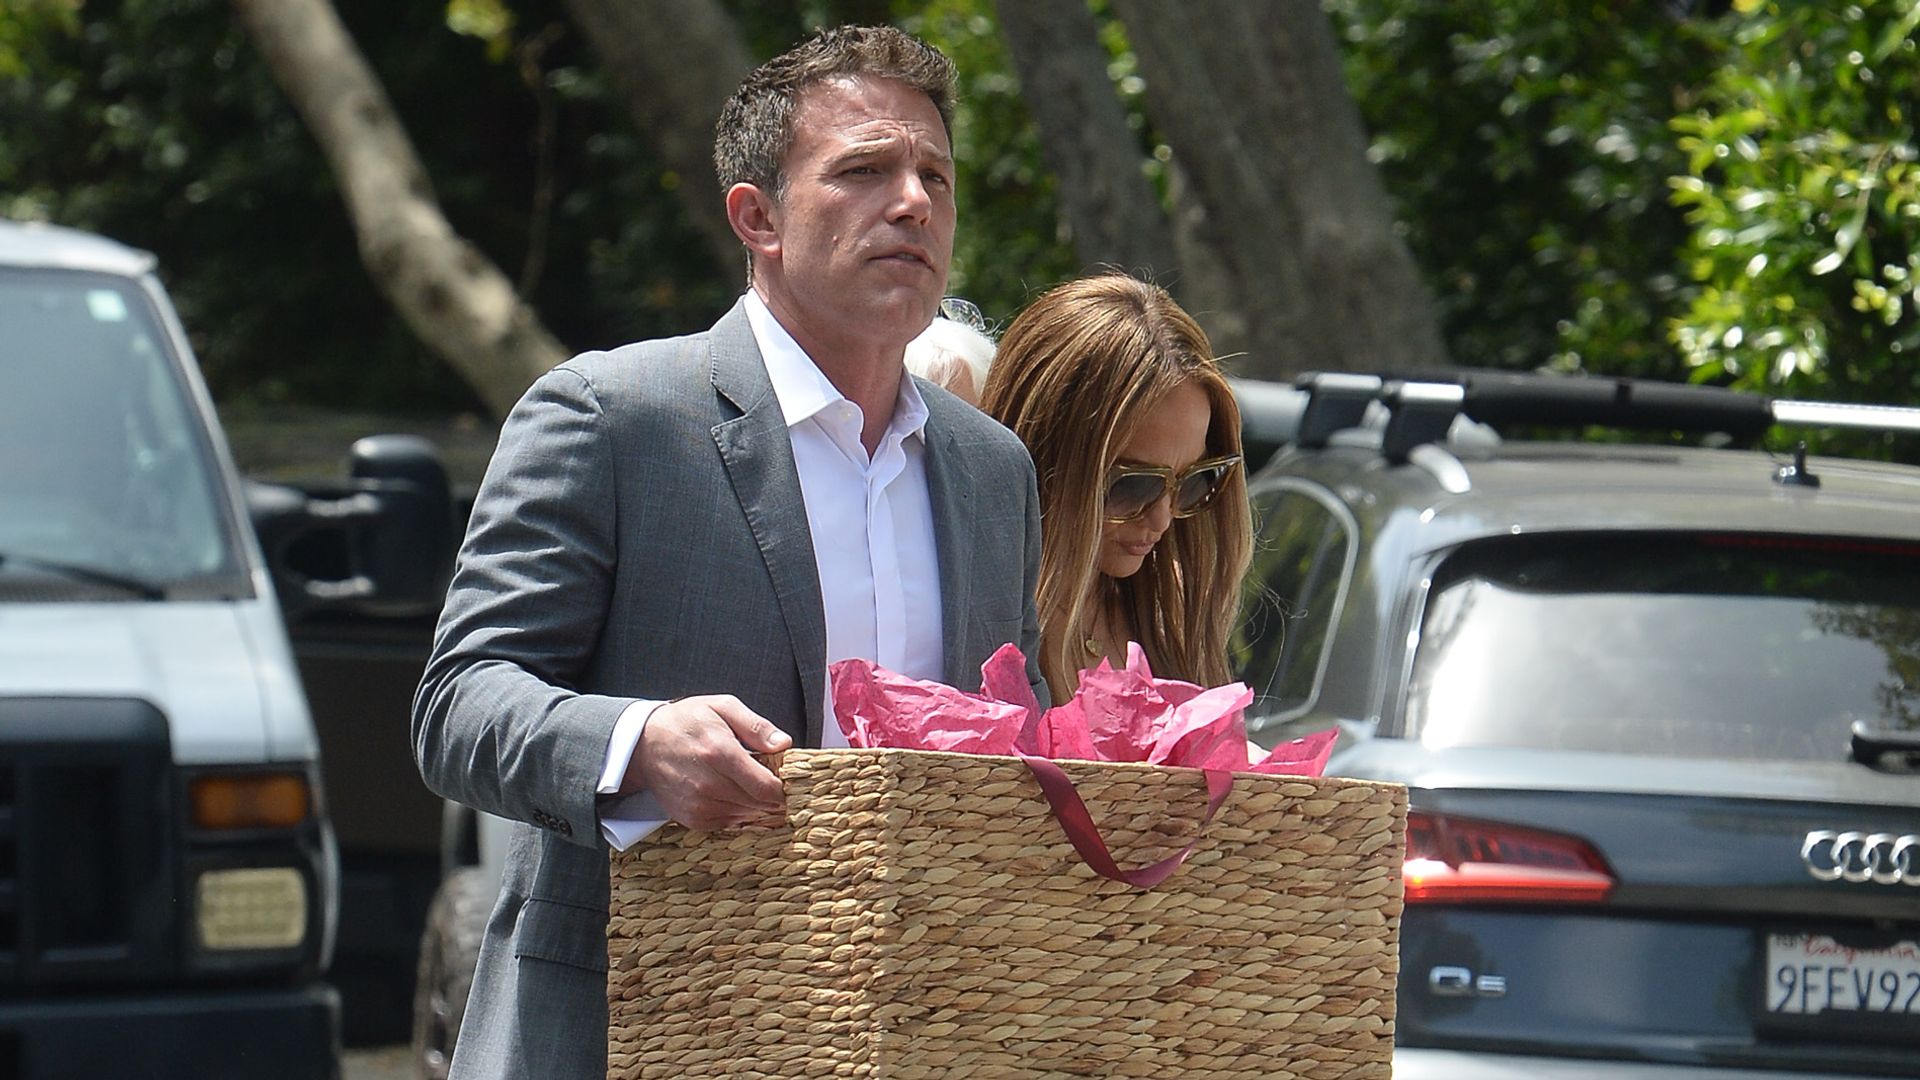 Ben Affleck finally reunites with Jennifer Lopez to celebrate daughter with ex Jennifer Garner amid marriage strain reports